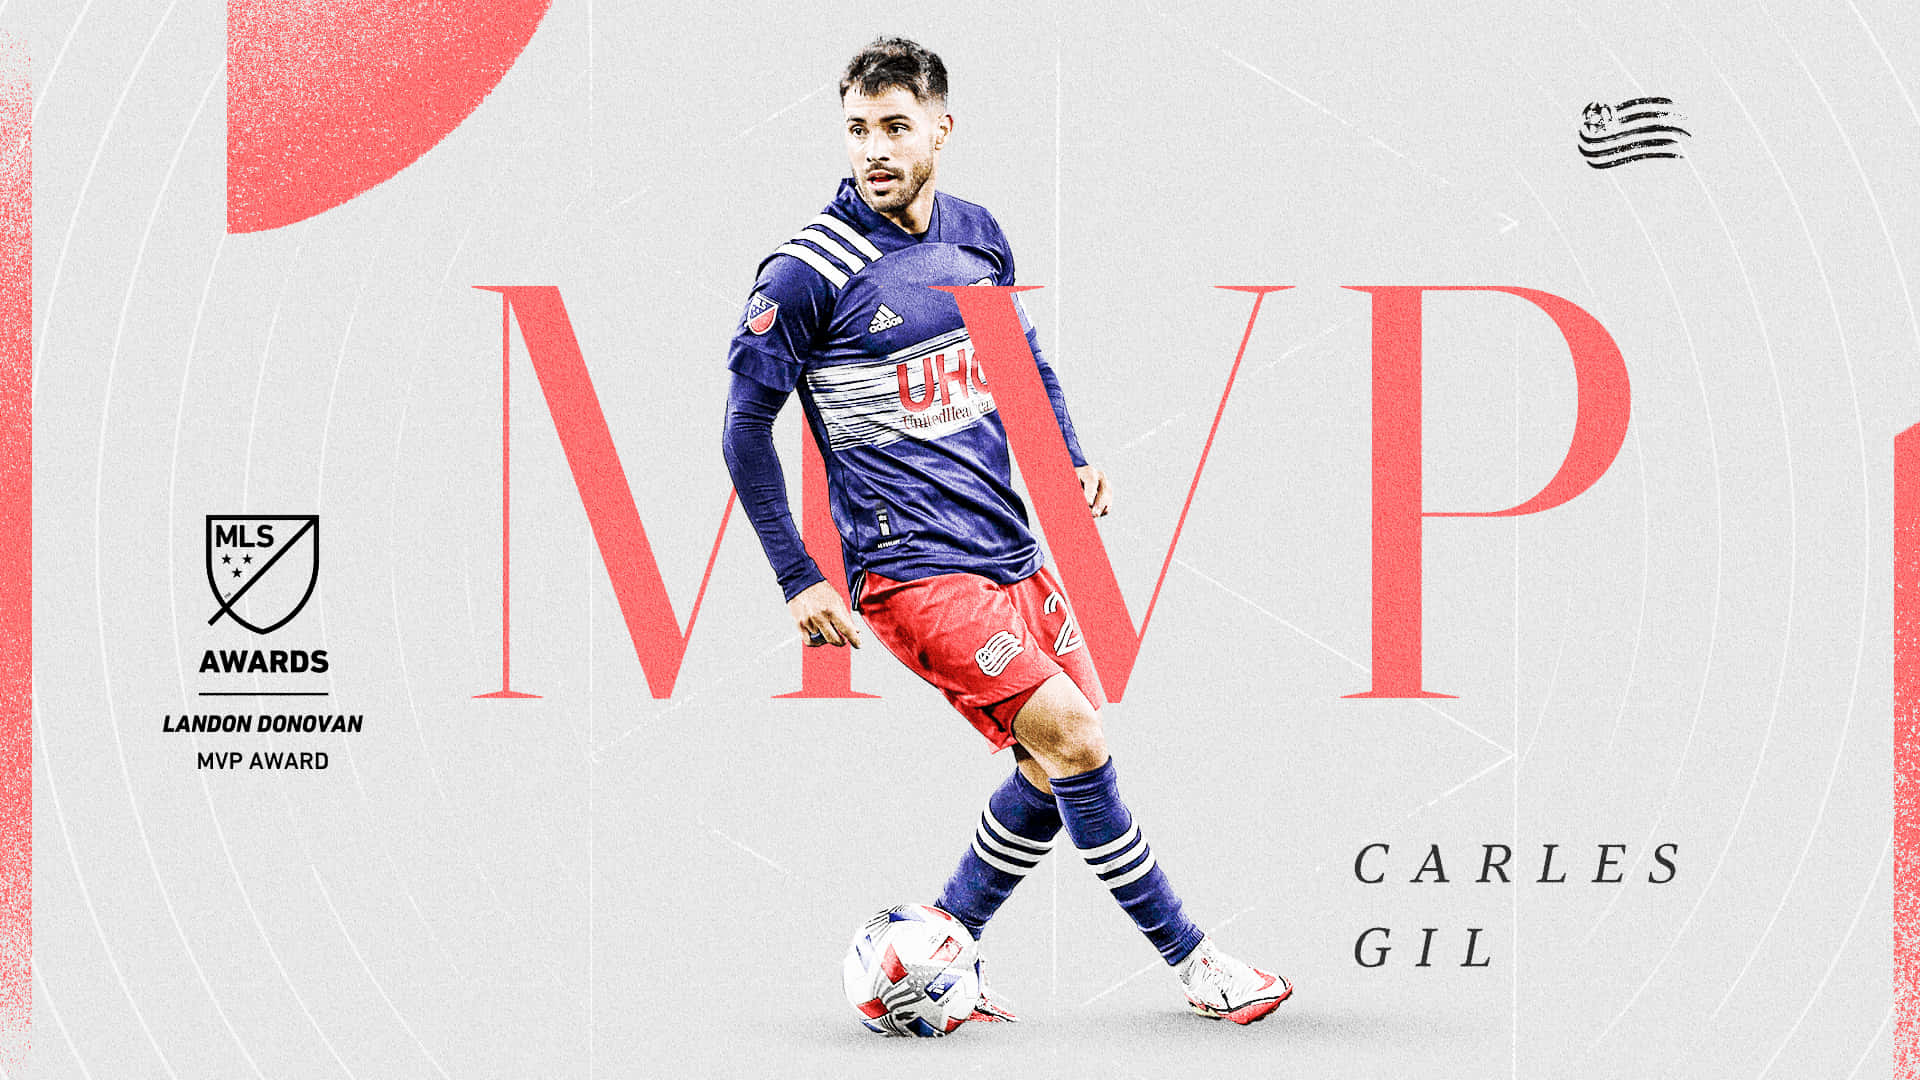 Mvp Poster Of Football Player Carles Gil Wallpaper